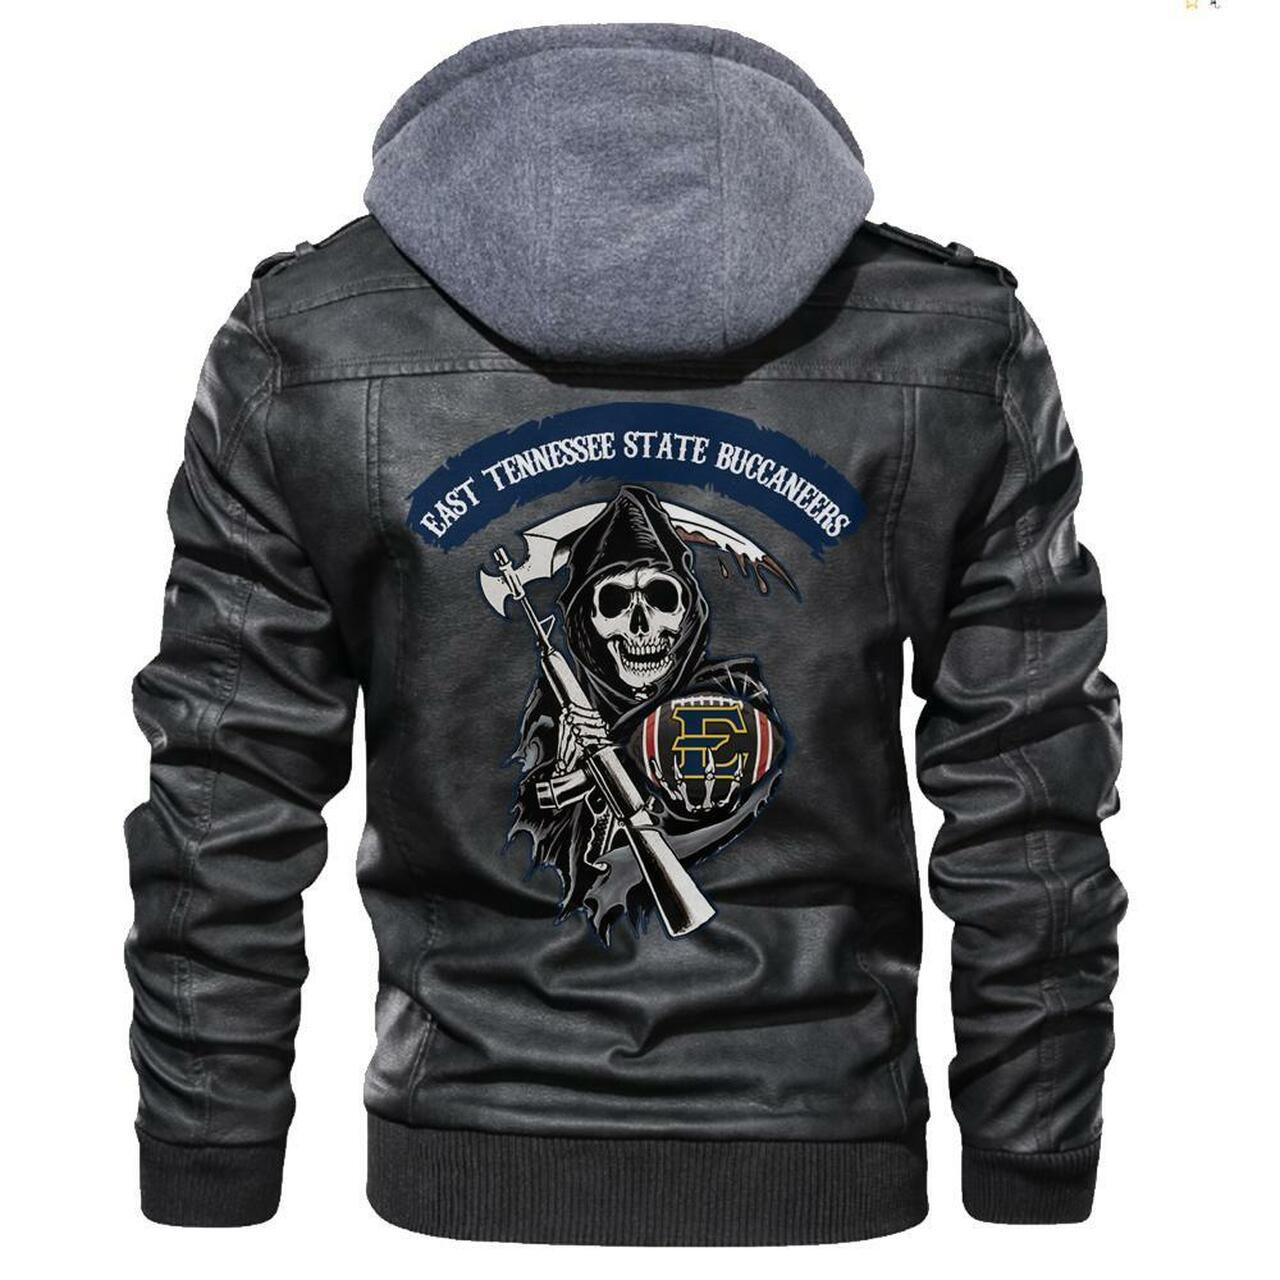 Top leather jacket Sells Best on Techcomshop 46